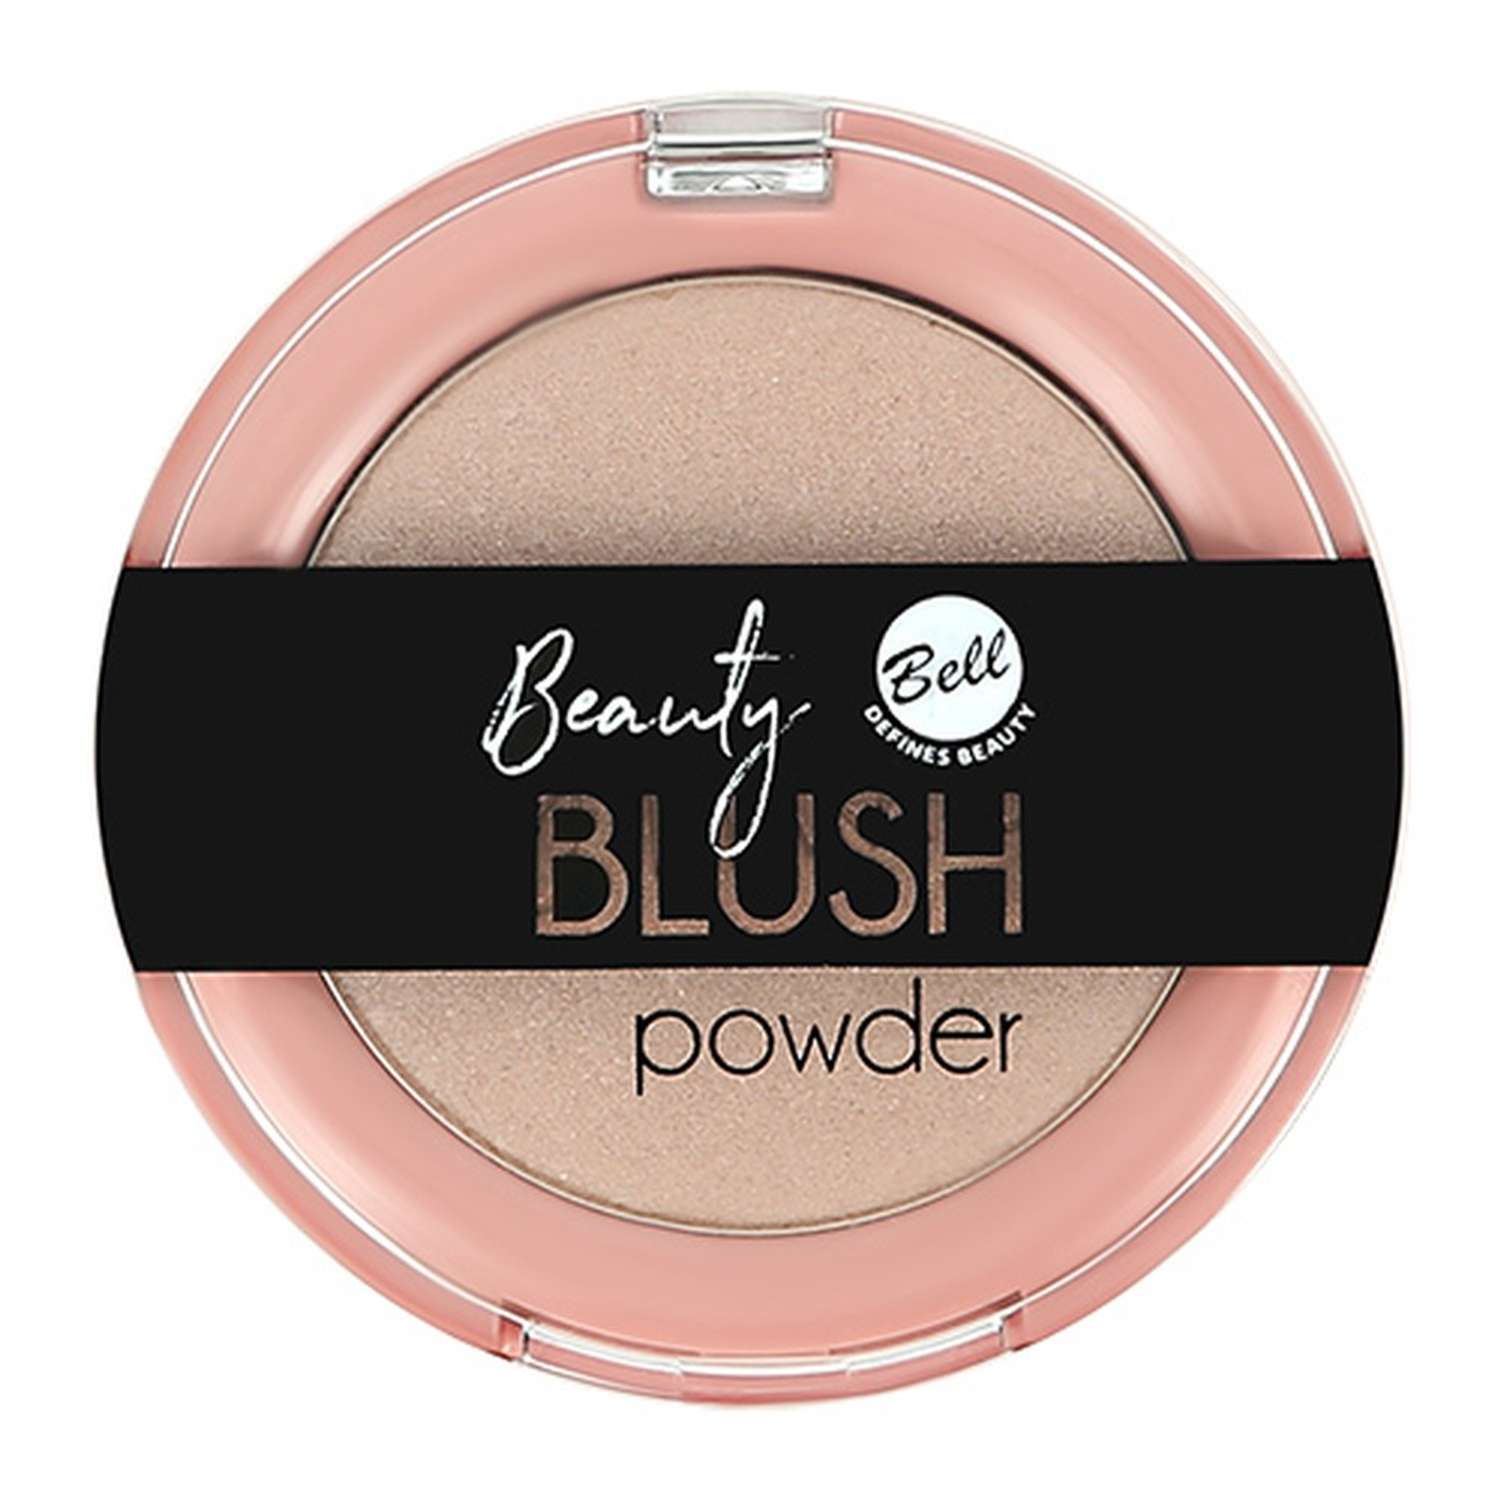 Румяна Bell компактные Beauty blush powder тон 02 - фото 3